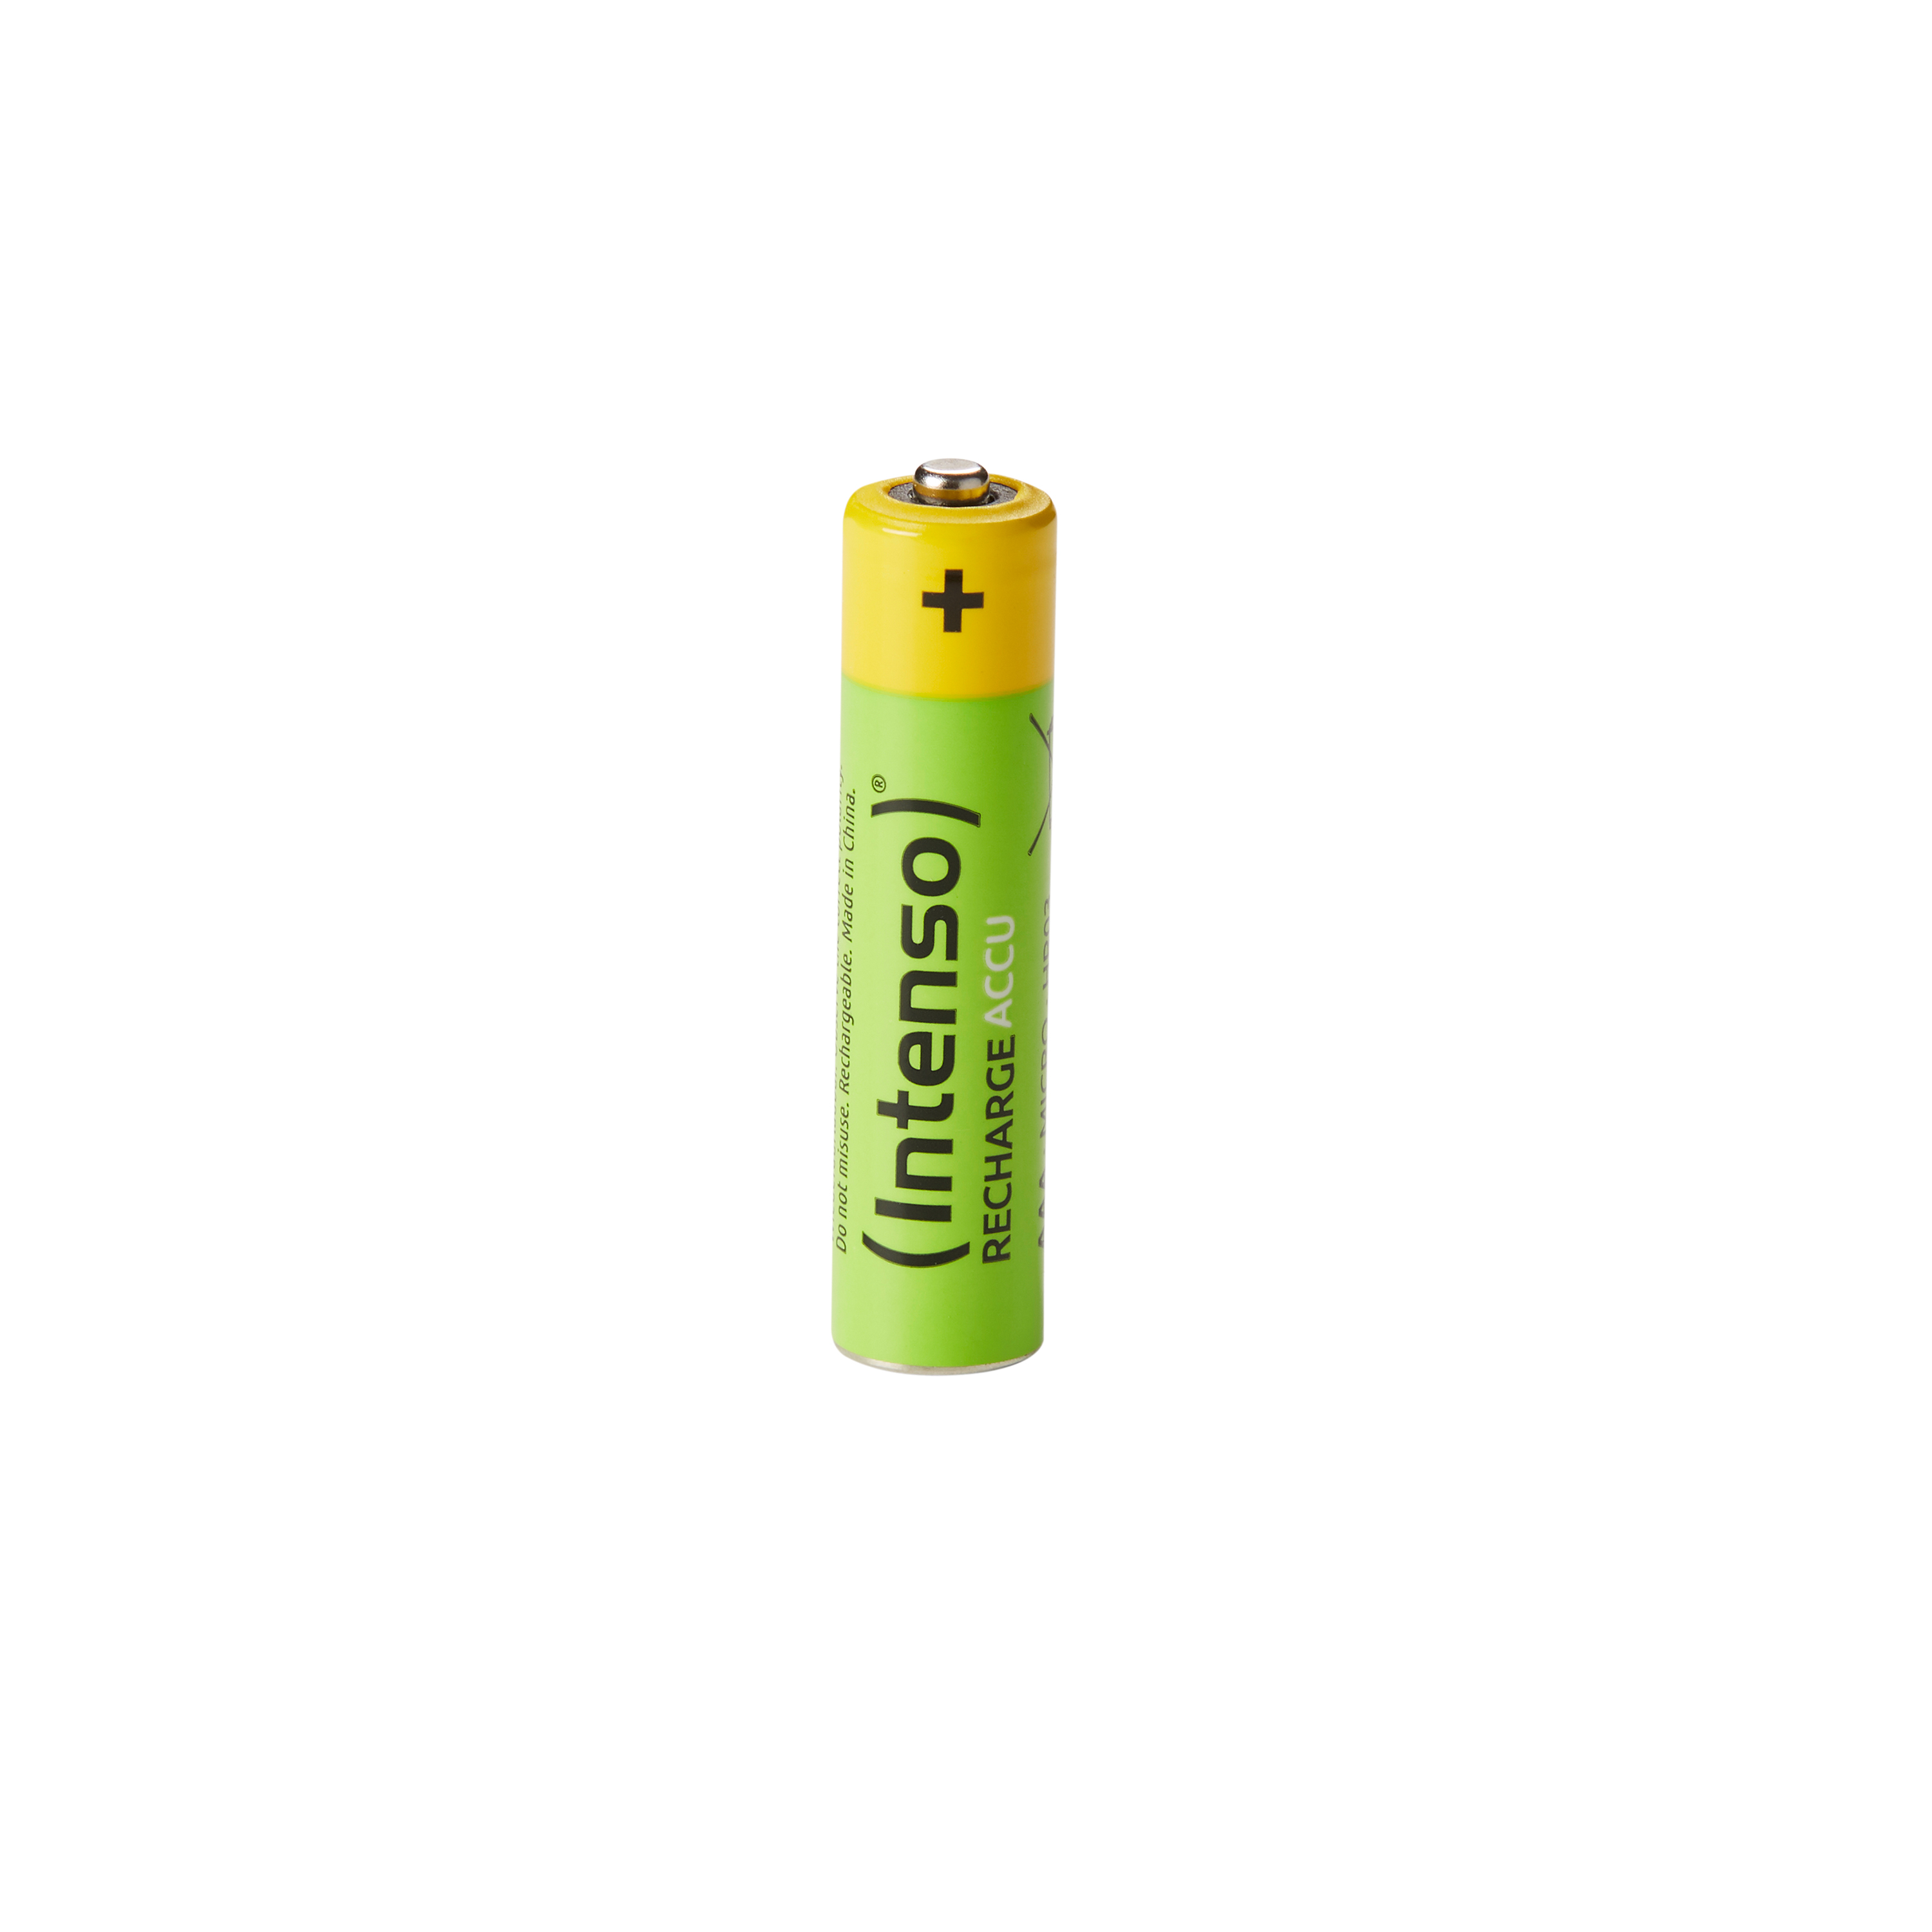 850 Batterie, AAA NiMH Batterie HR03, AAA, Eco 850 4er (Nickel-Metallhydrid) Mignon, mAh Energy Pack HR03 INTENSO Accu mAh Wiederaufladbare